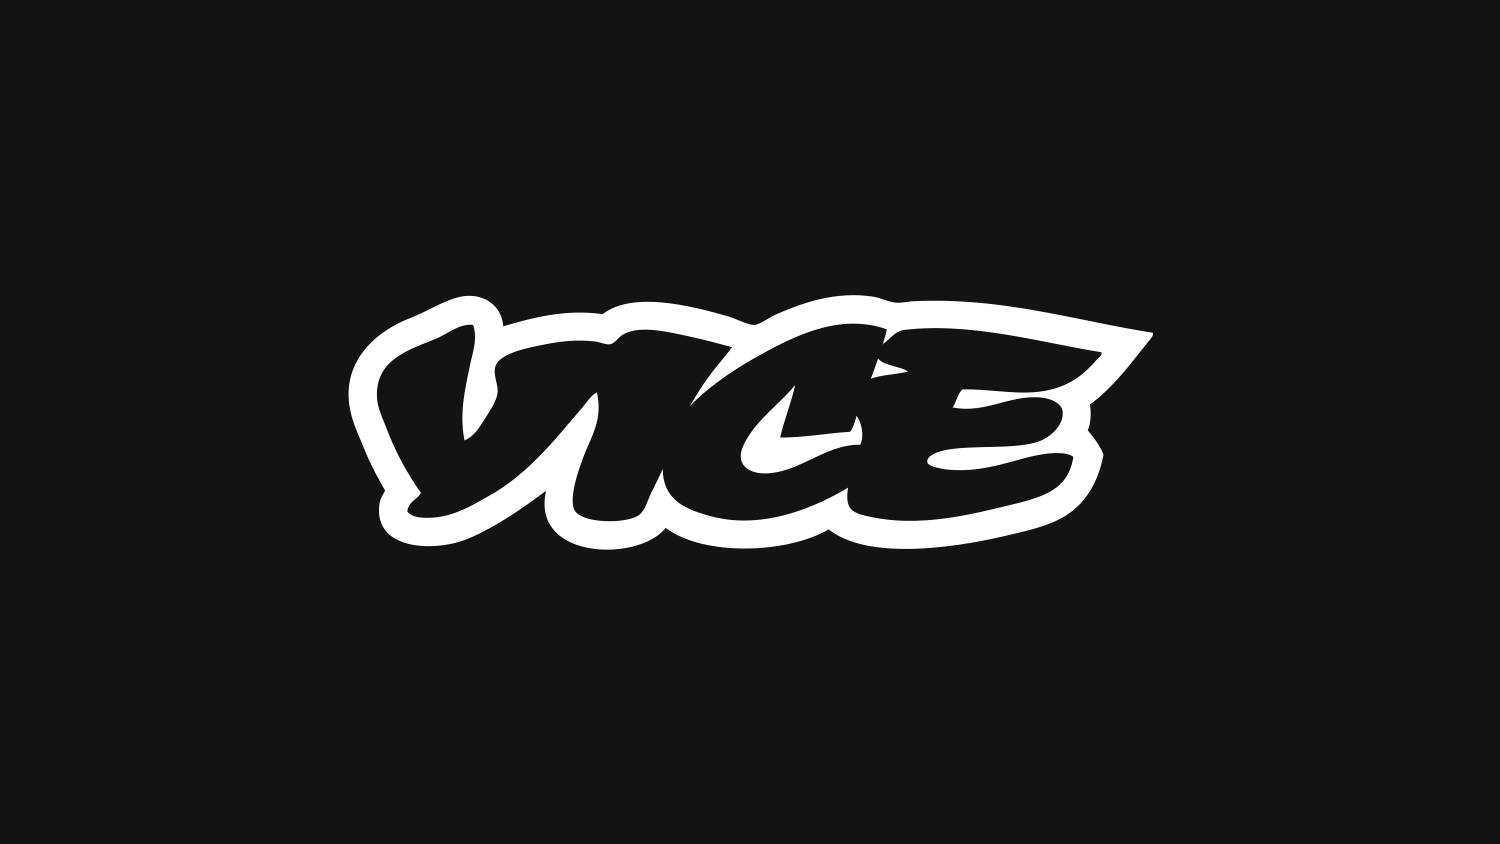 VICE logo.png